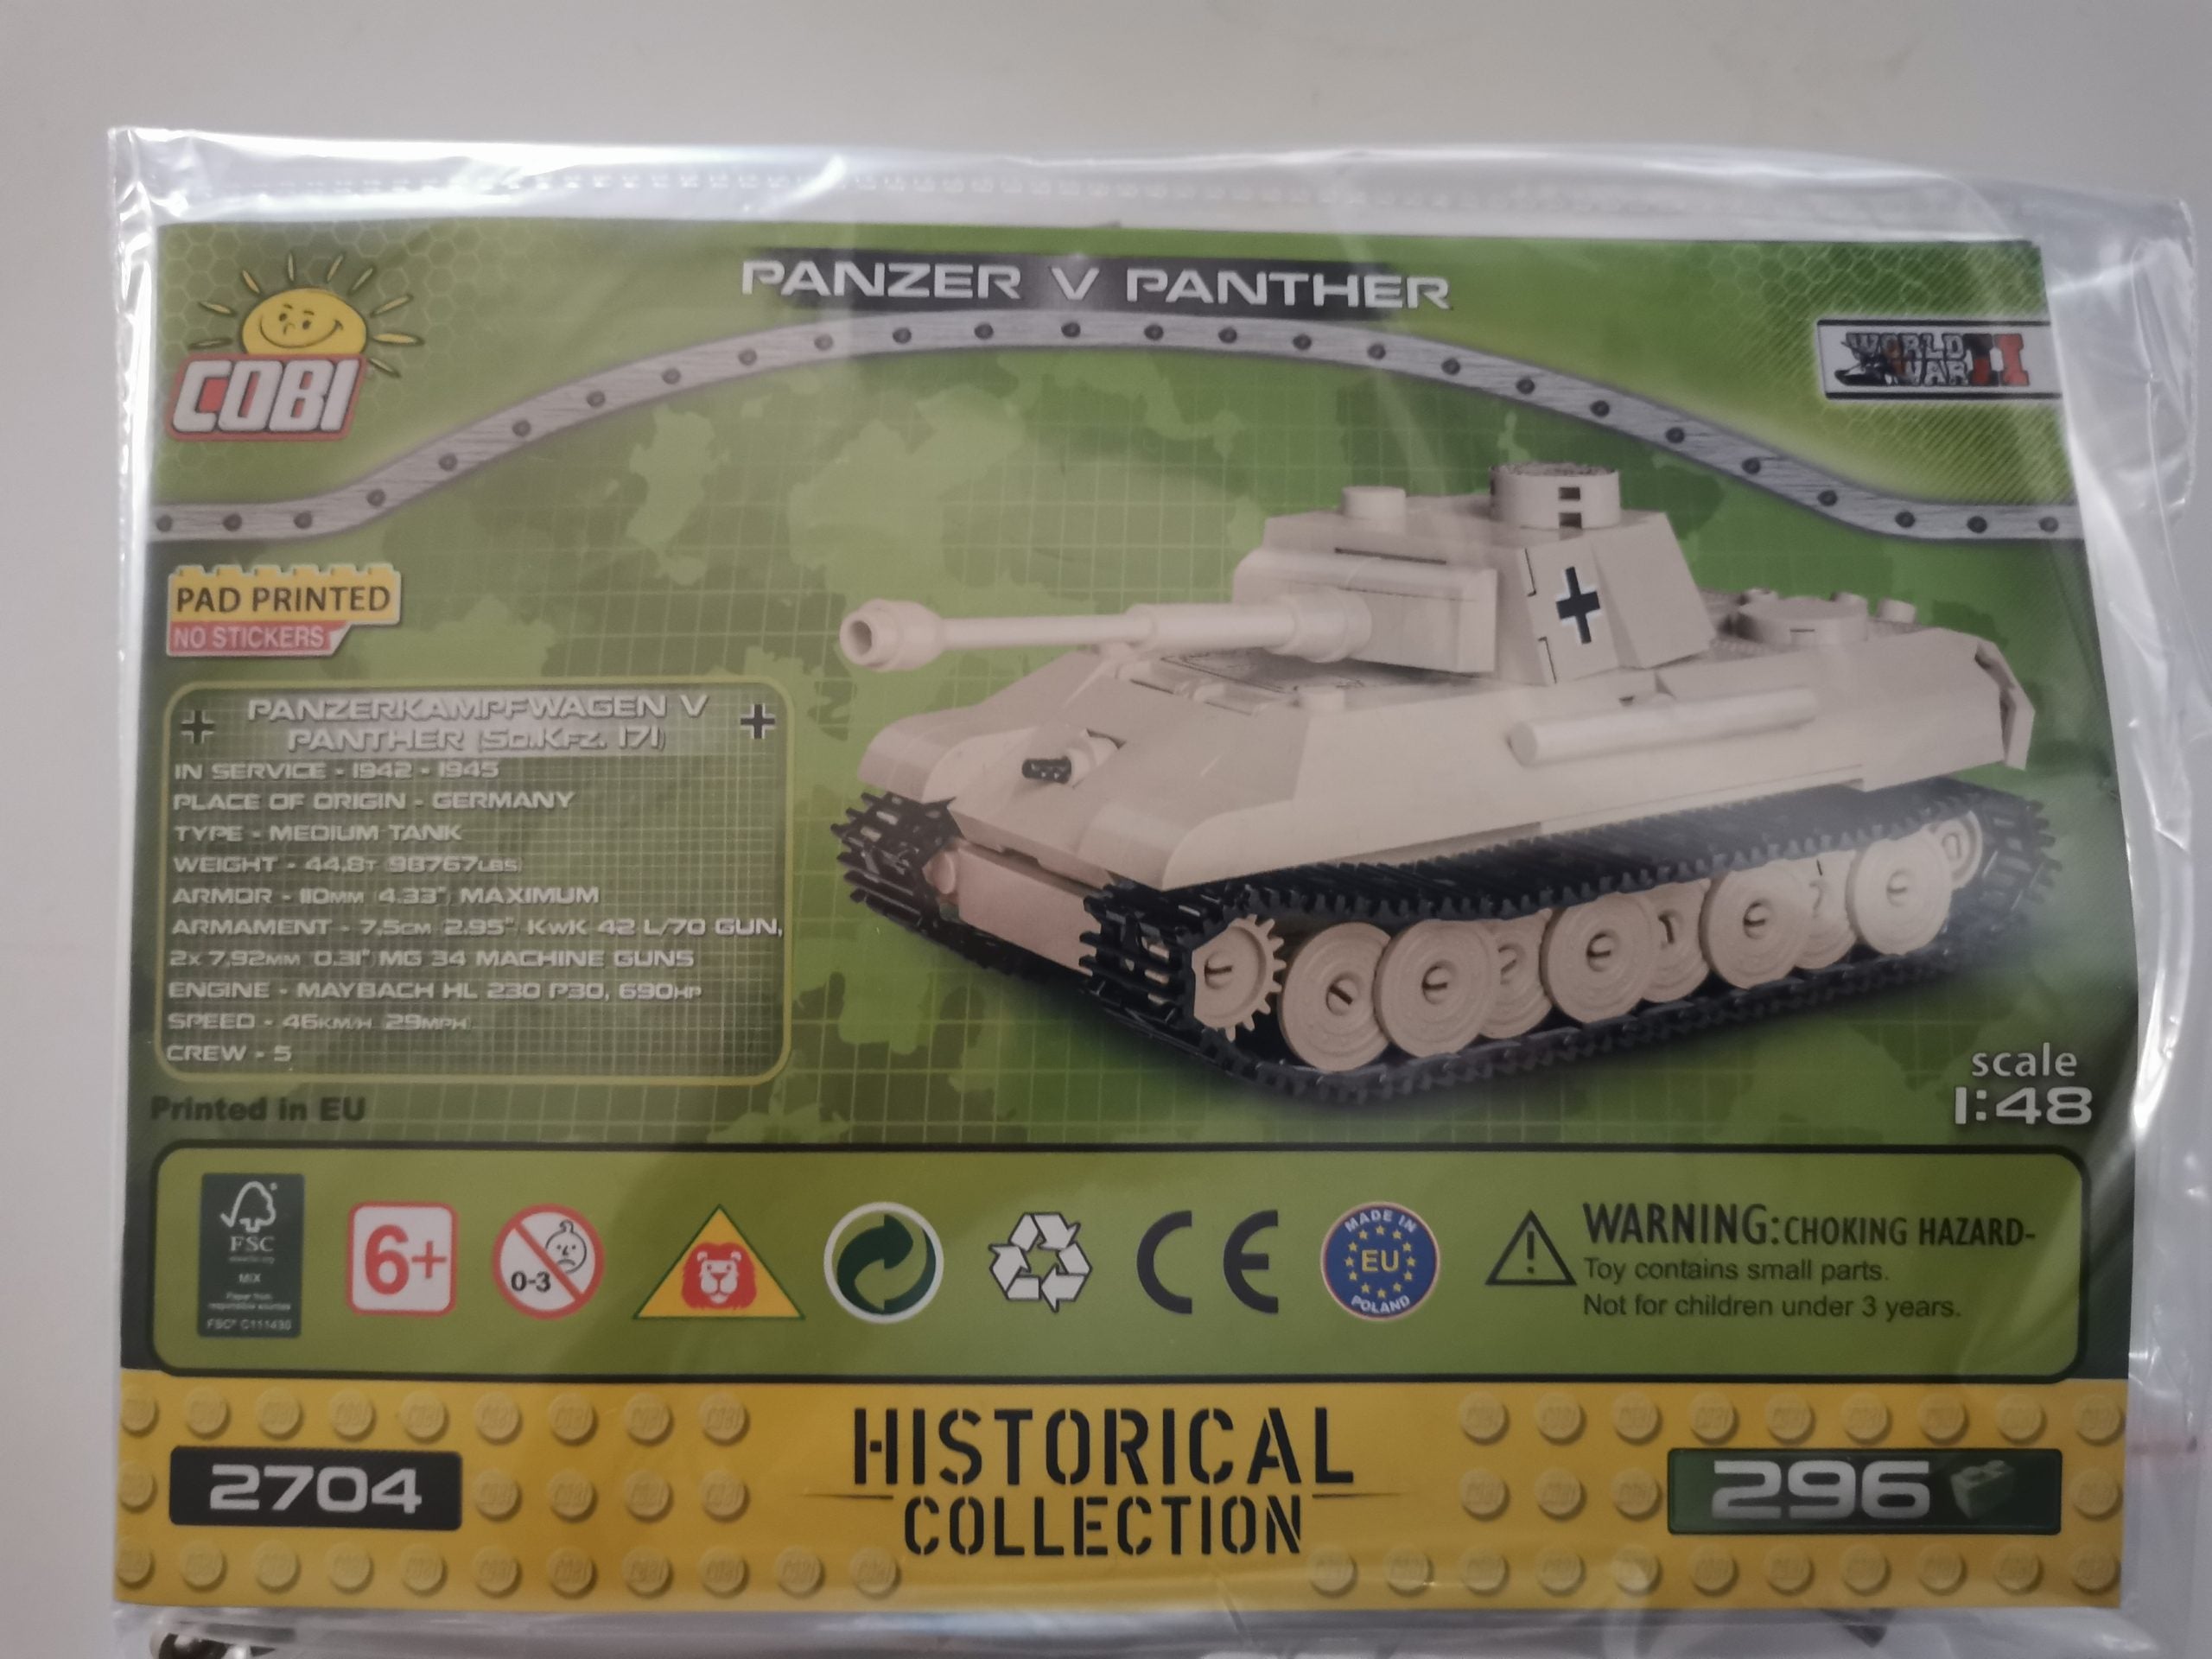 Cobi 2704 Panzer V Panther (1:48) used